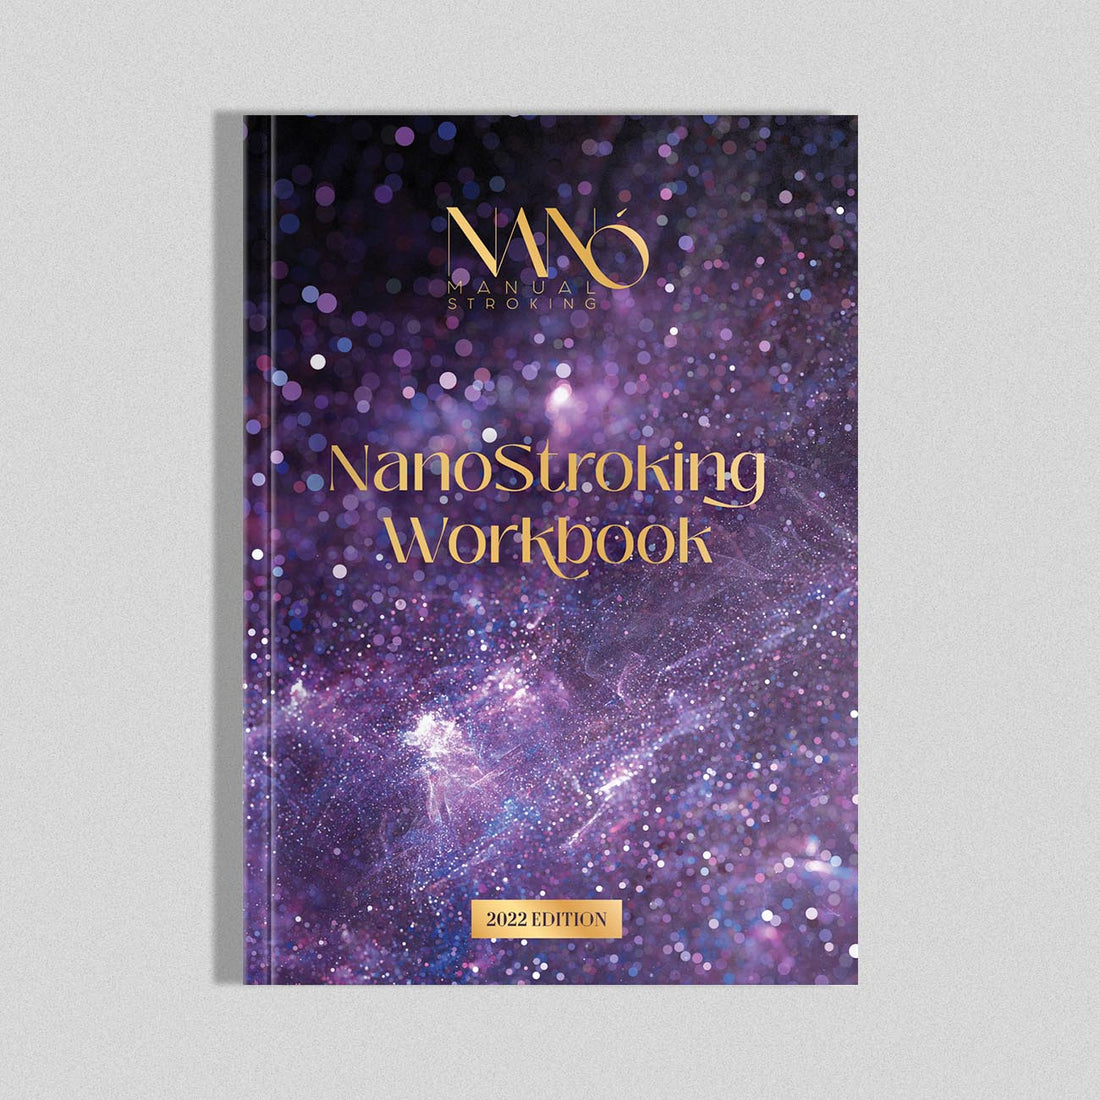 Manual Nanostroking® Workbook by Aleksandra Maniuse